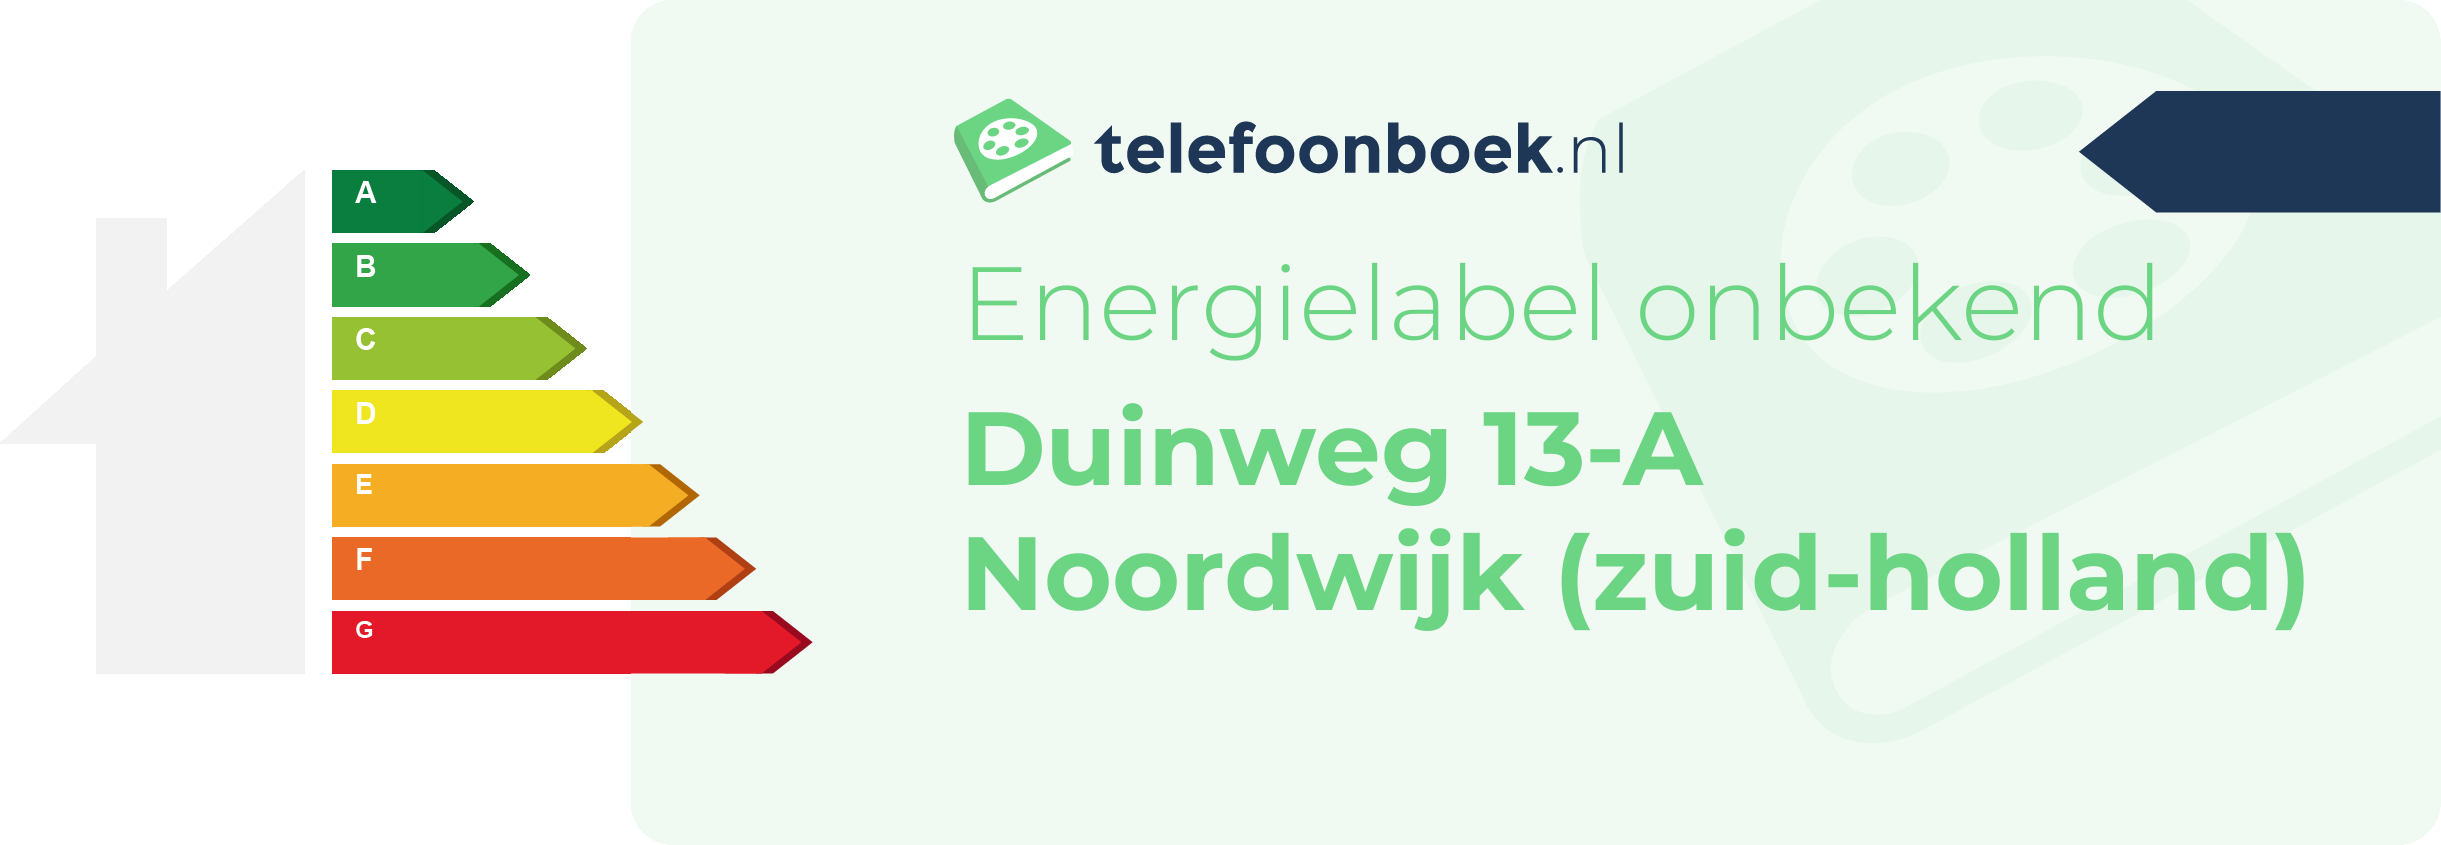 Energielabel Duinweg 13-A Noordwijk (Zuid-Holland)